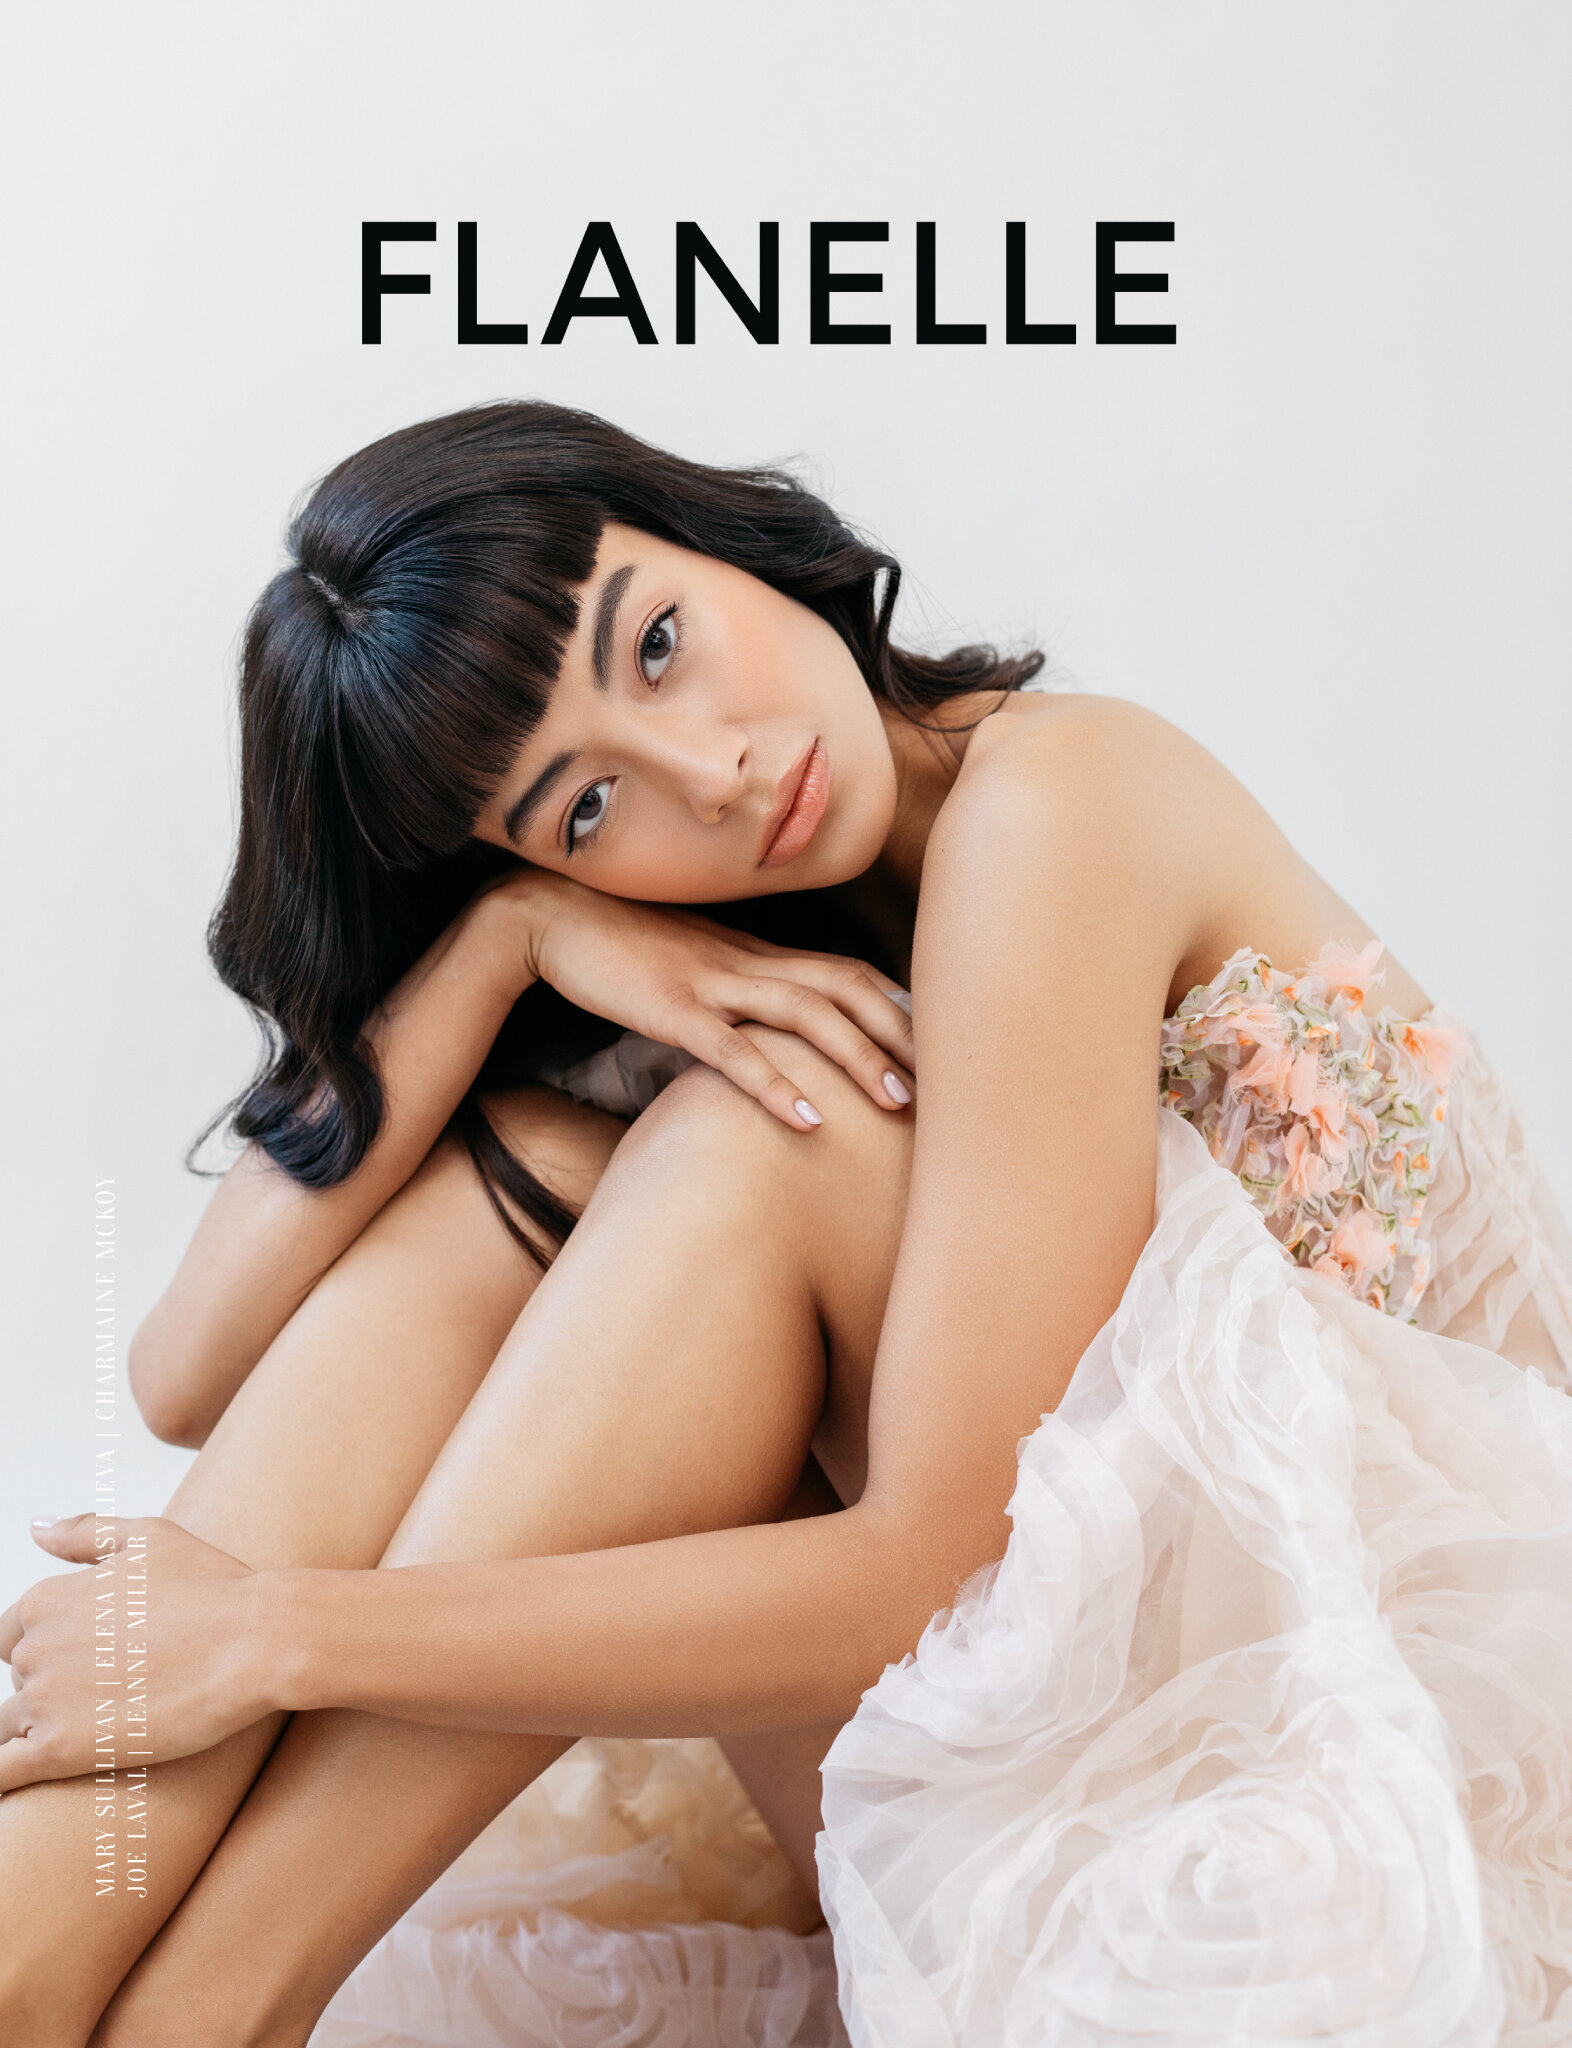   Flanelle Magazine  